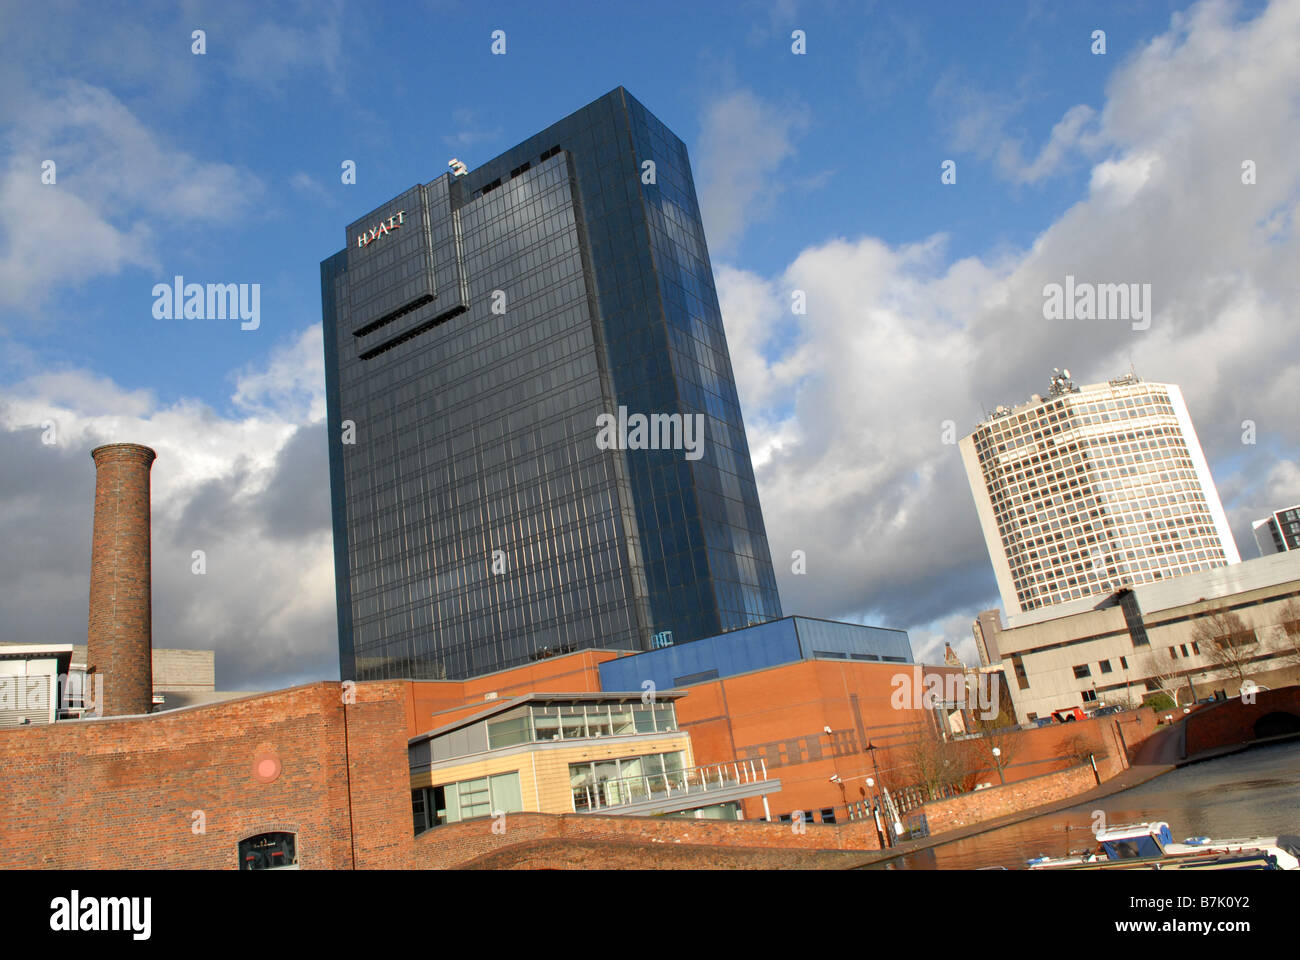 The Hyatt Hotel in Birmingham England Stock Photo